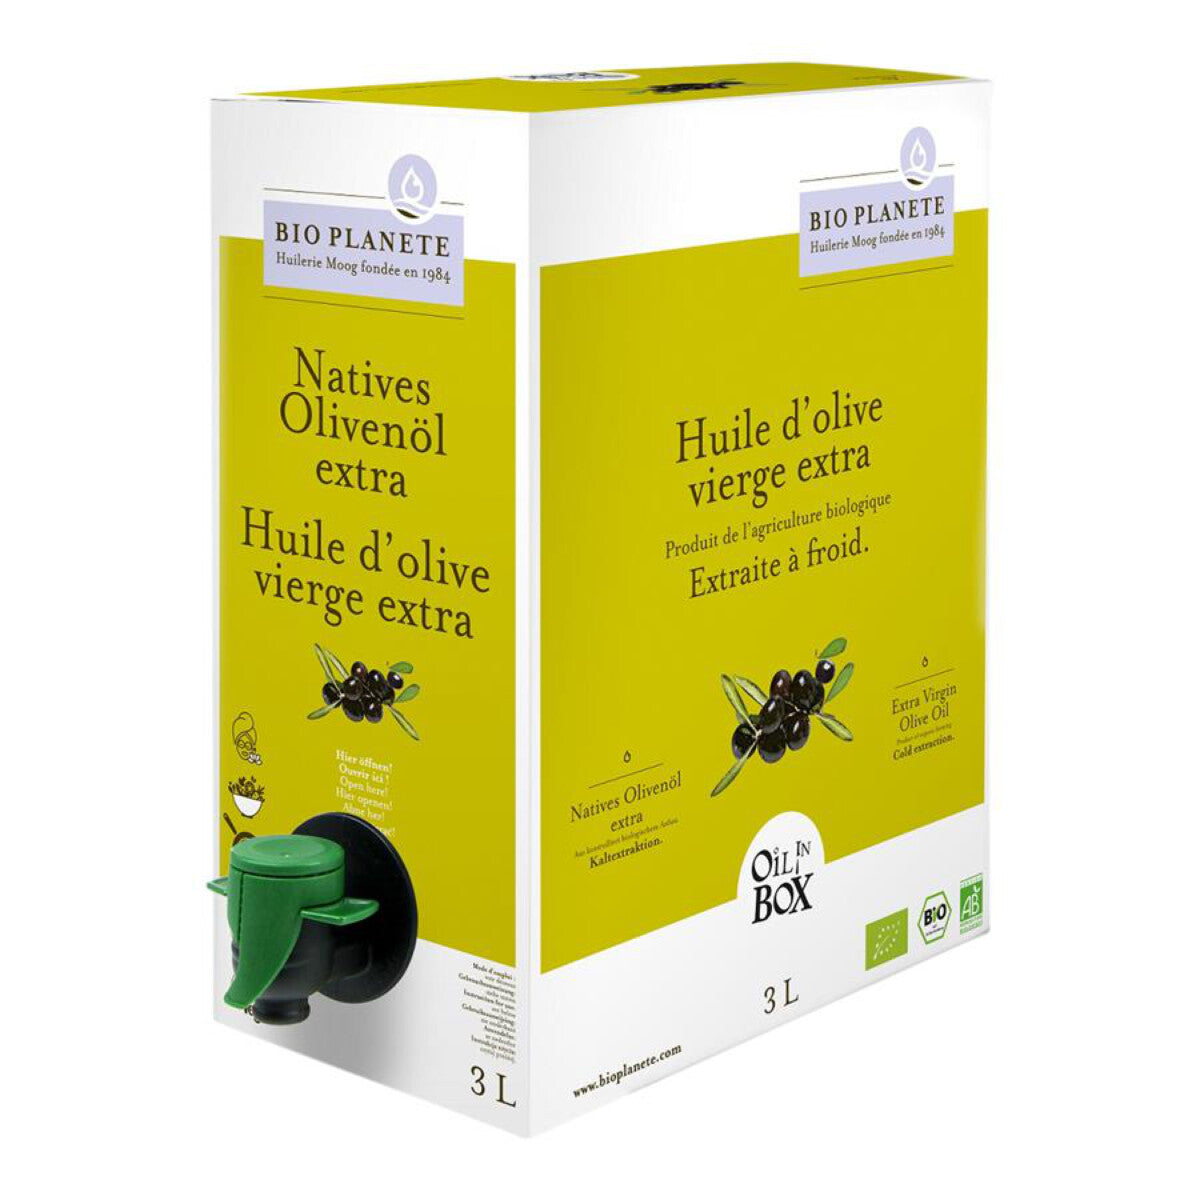 BIO PLANETE Olivenöl nativ extra - 3 l